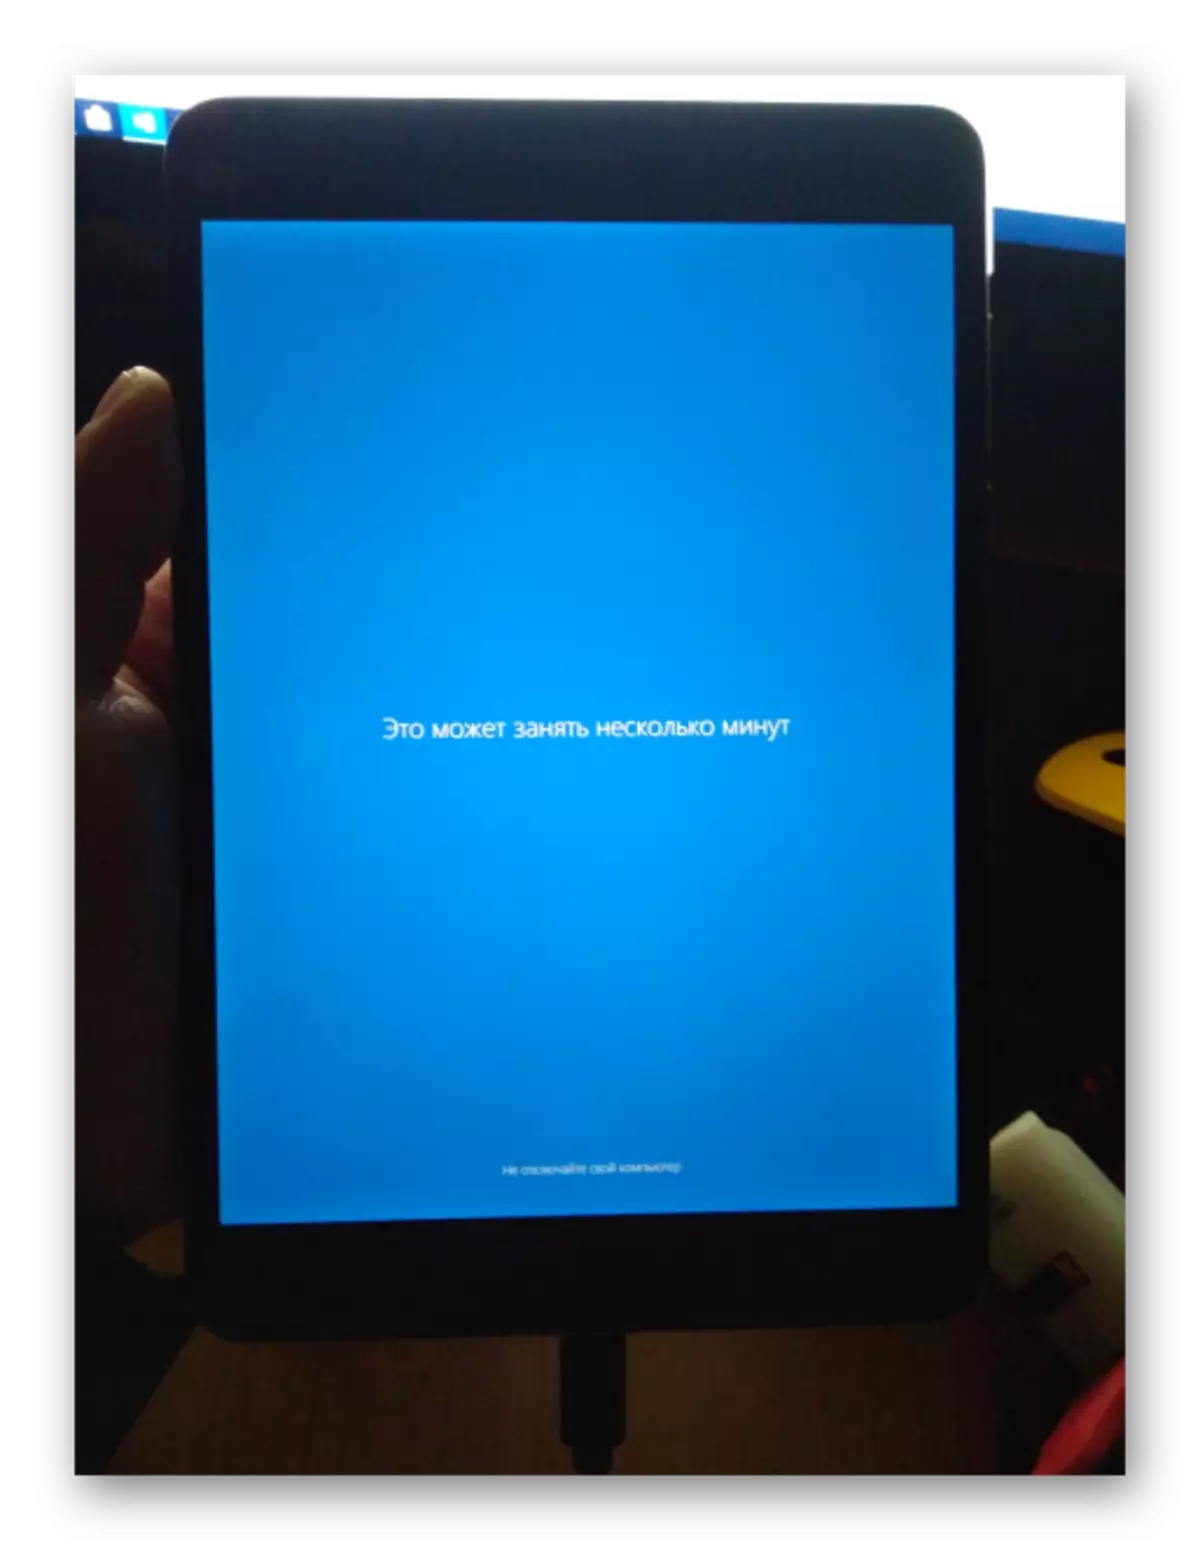 Xiaomi Mipad 2 Nagdagan sa Windows 10 Pagkahuman sa pag-instalar